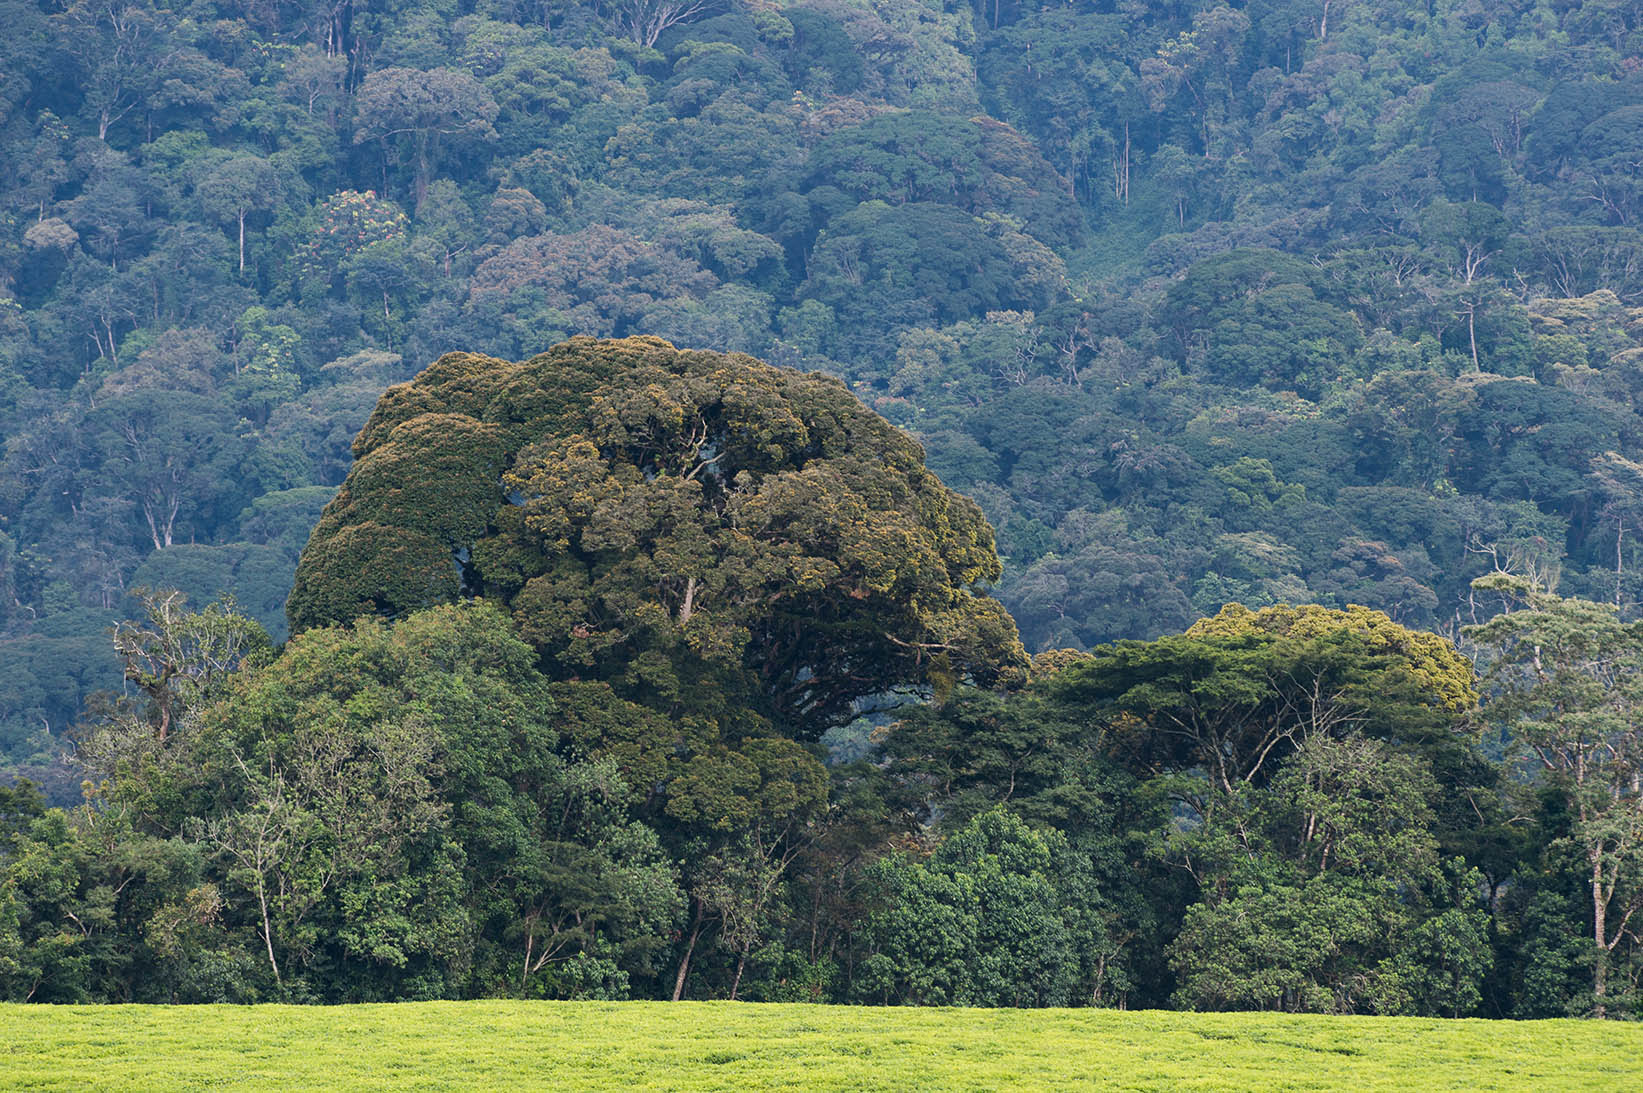 Nyungwe Forest, Rwanda